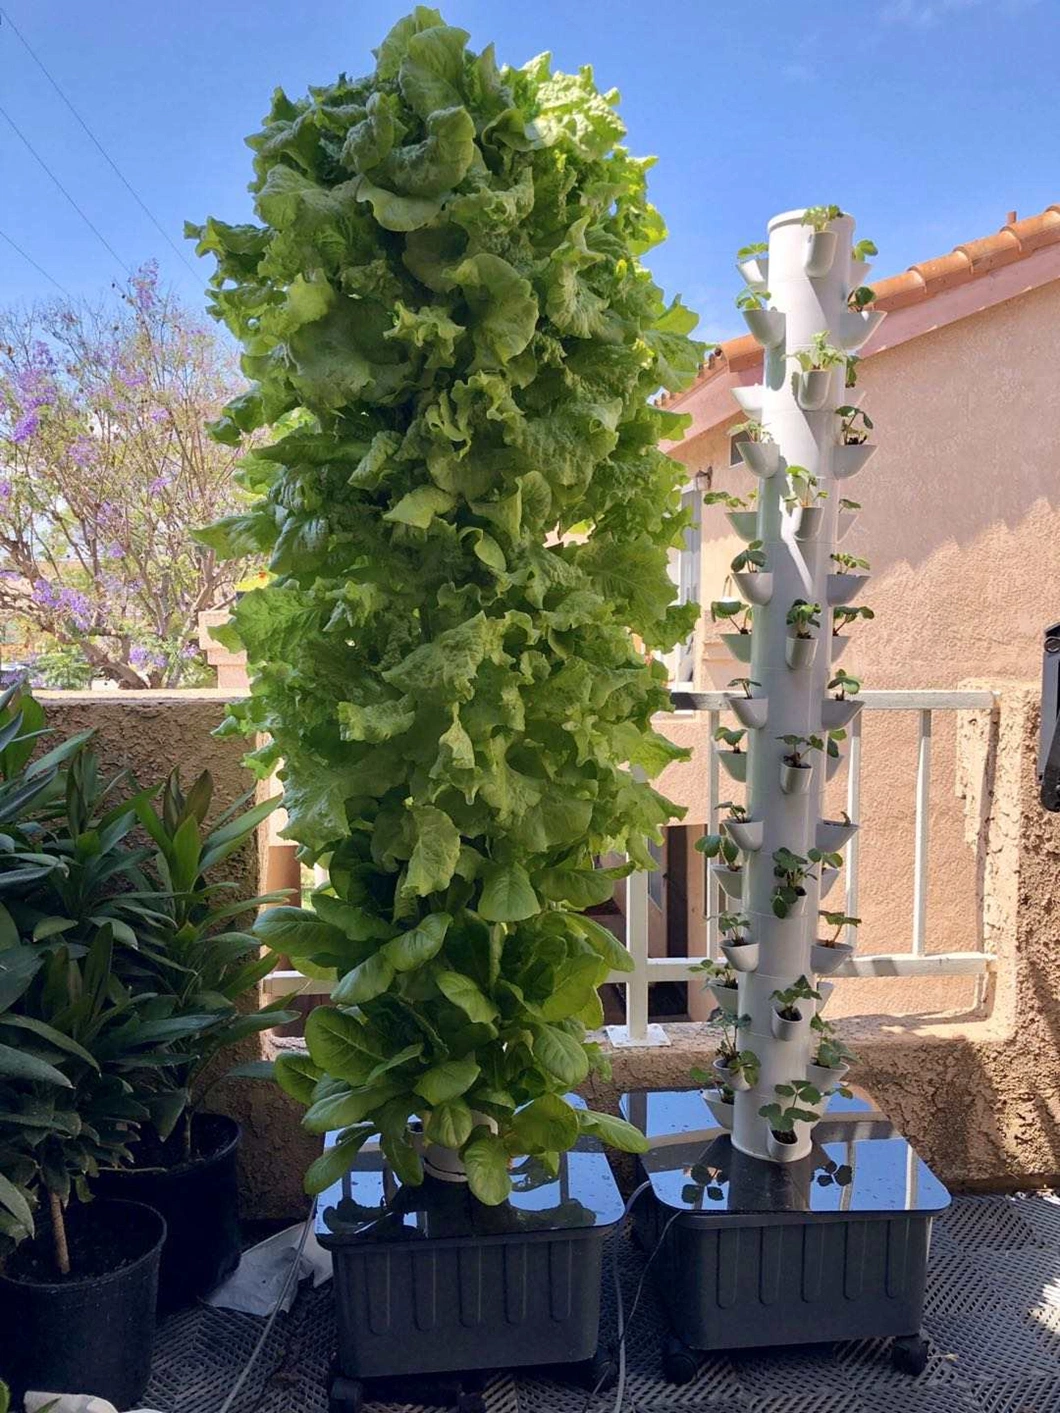 Garden Indoor DIY Hydroponic System Vertical Grow Tower for Lettuce/Celery/Vegetable/Crops Aeroponics Growing